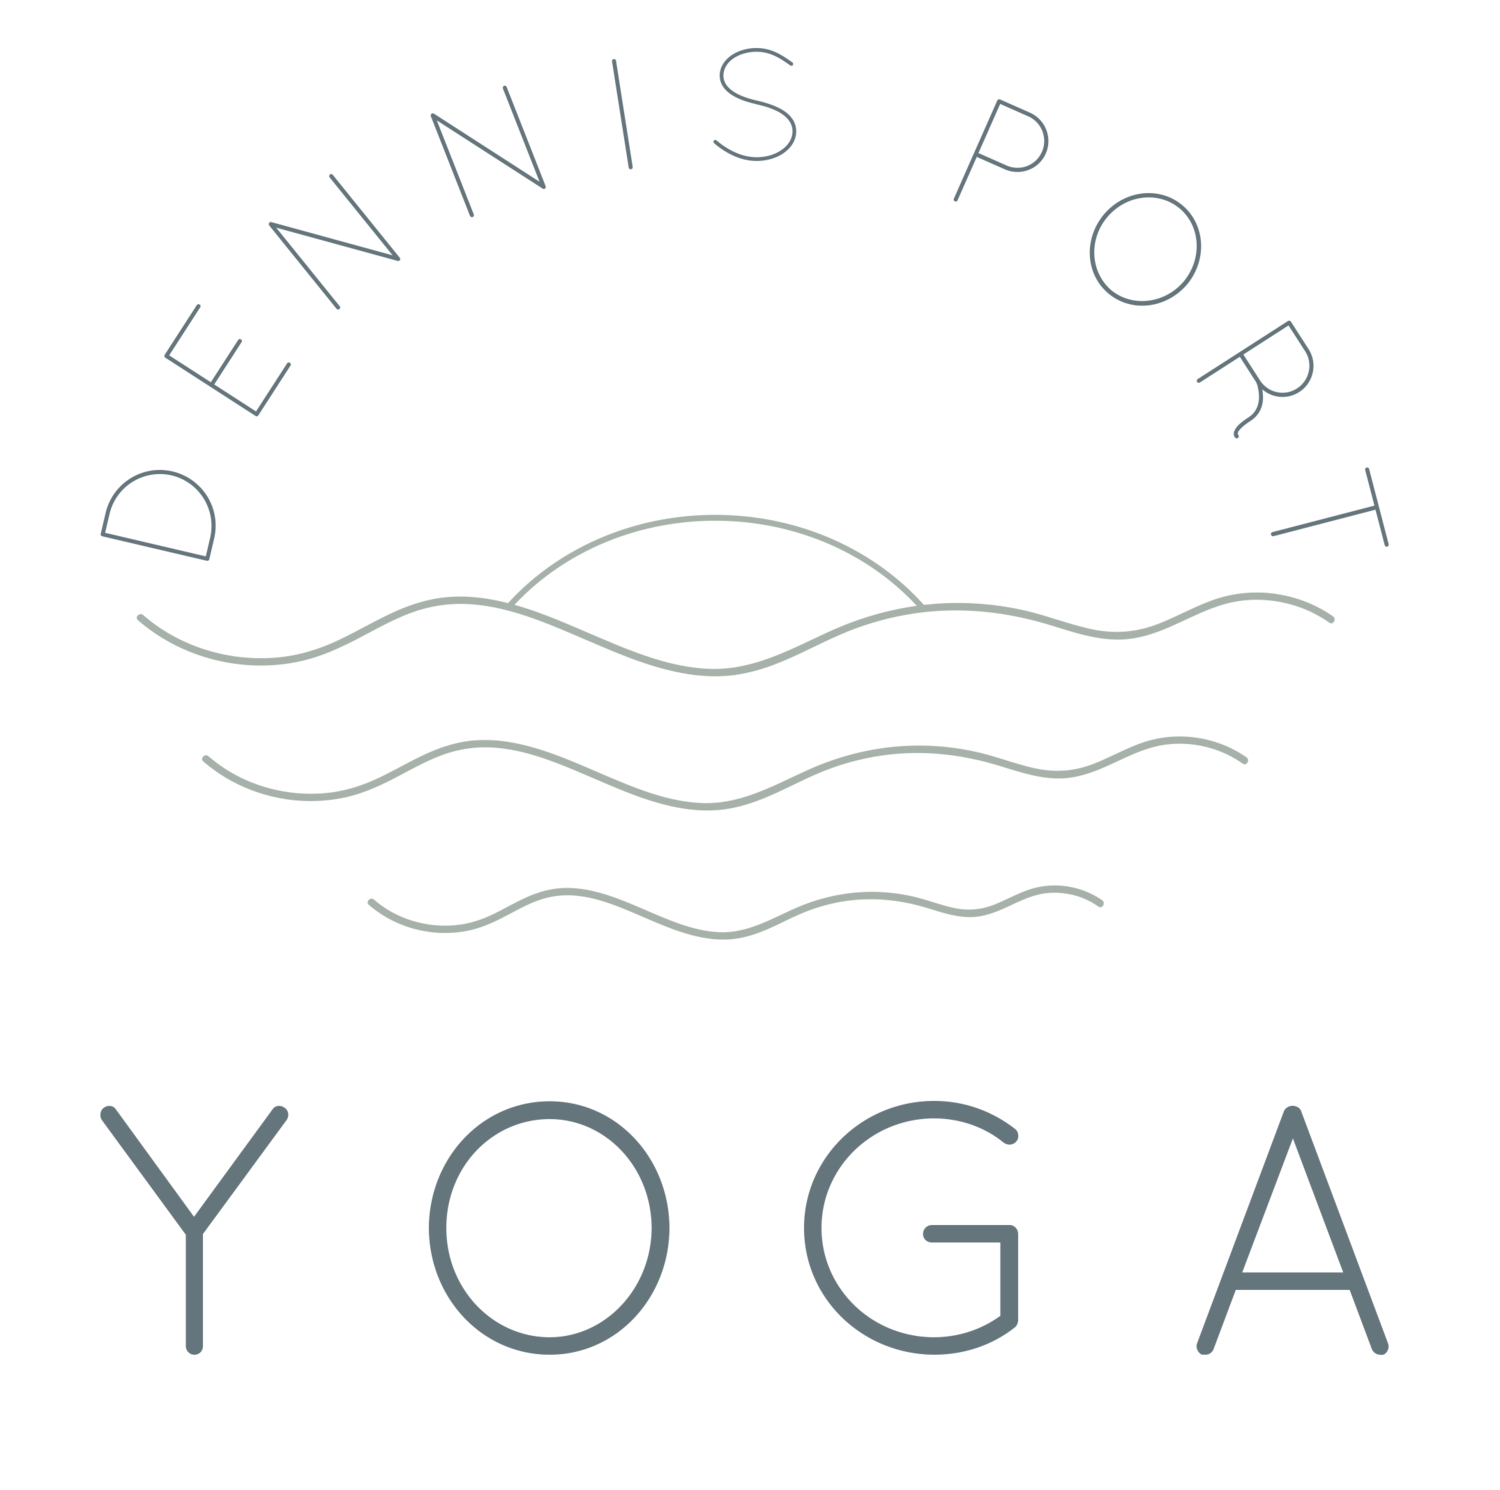 Dennis Port Yoga